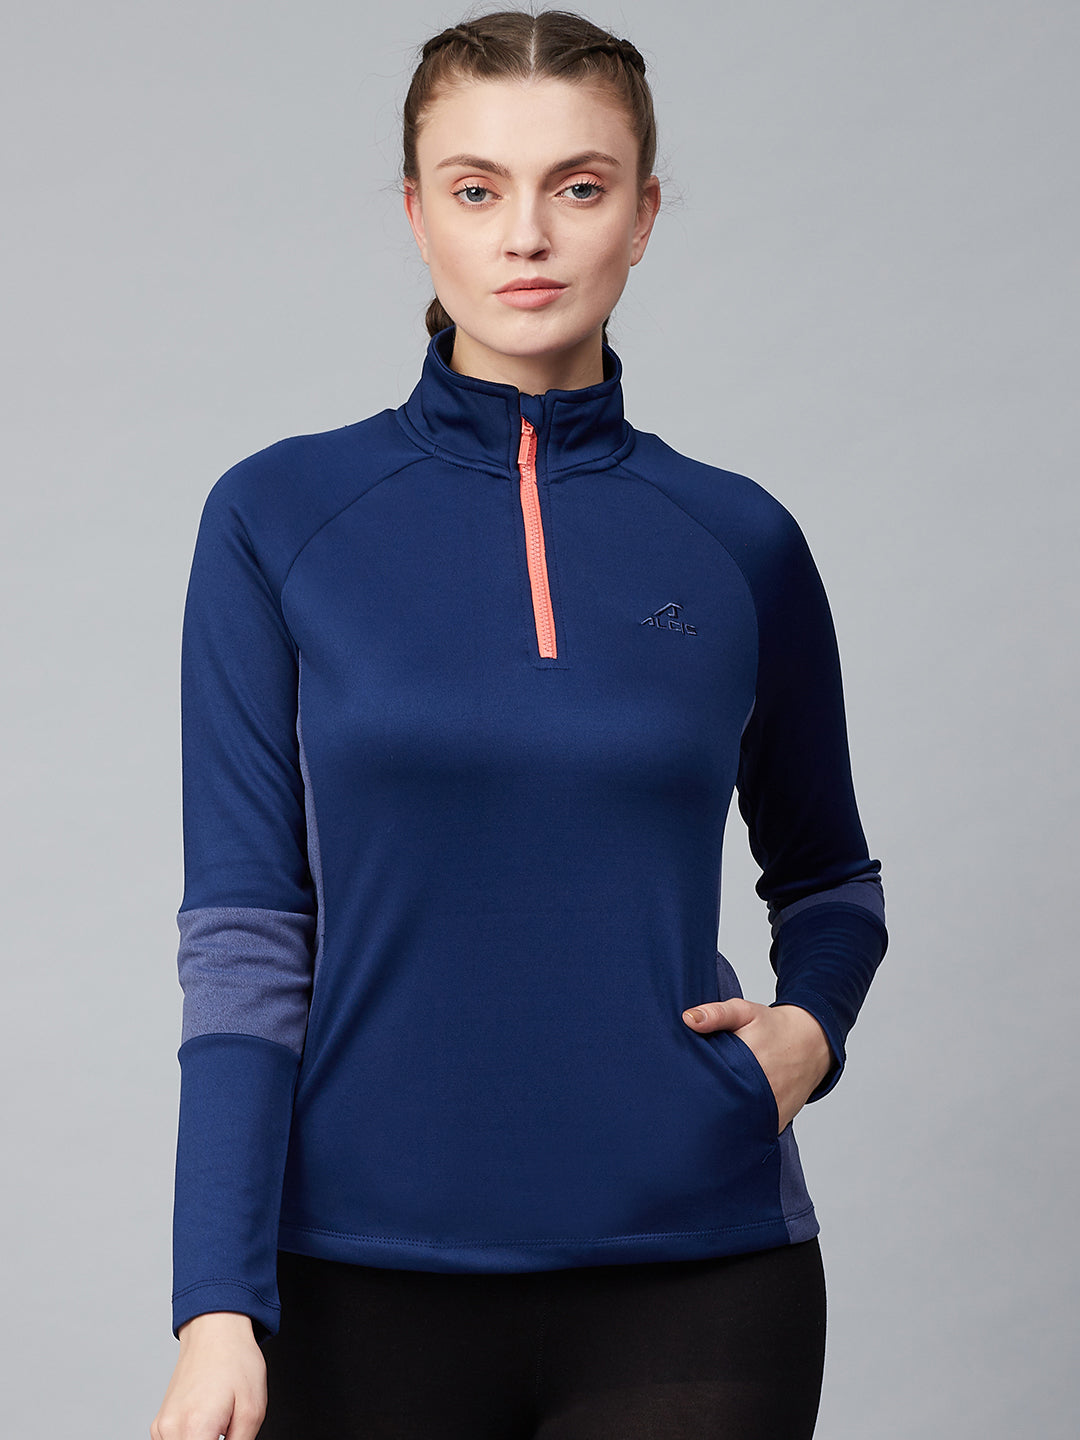 Alcis Women Navy Blue Solid Pullover Sweatshirt